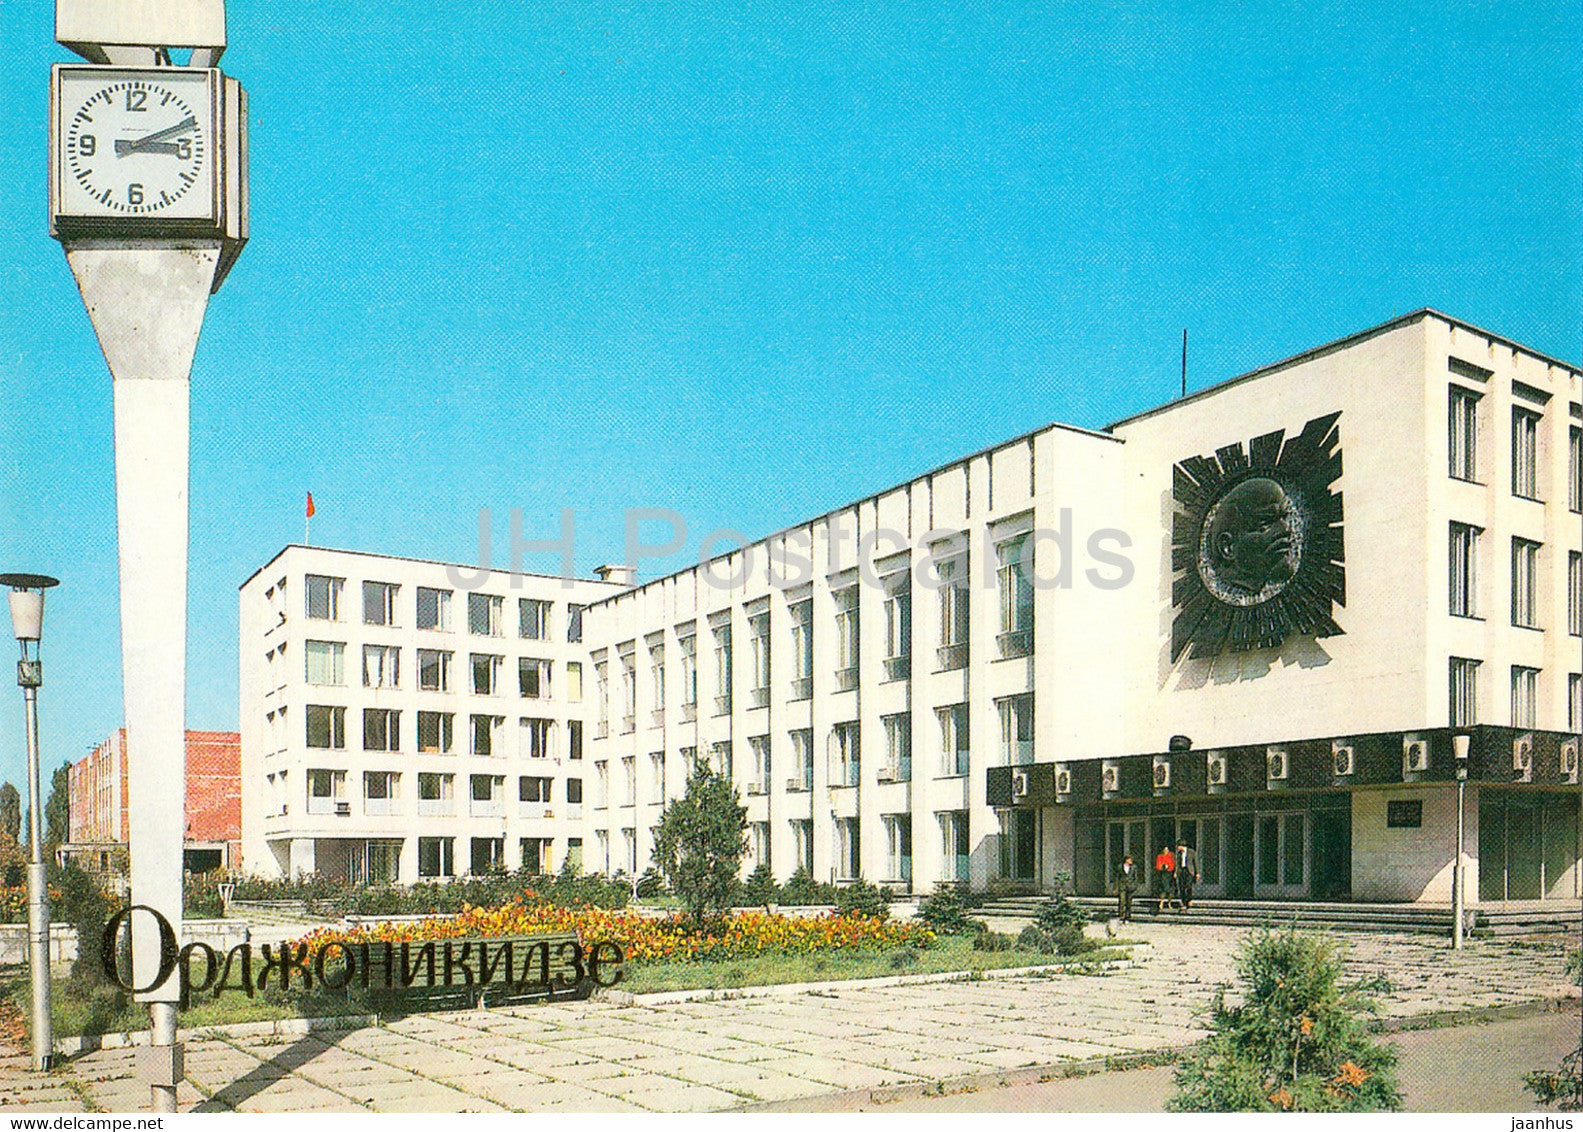 Vladikavkaz - Ordzhonikidze - Administrative building - clock - Ossetia - 1984 - Russia USSR - unused - JH Postcards